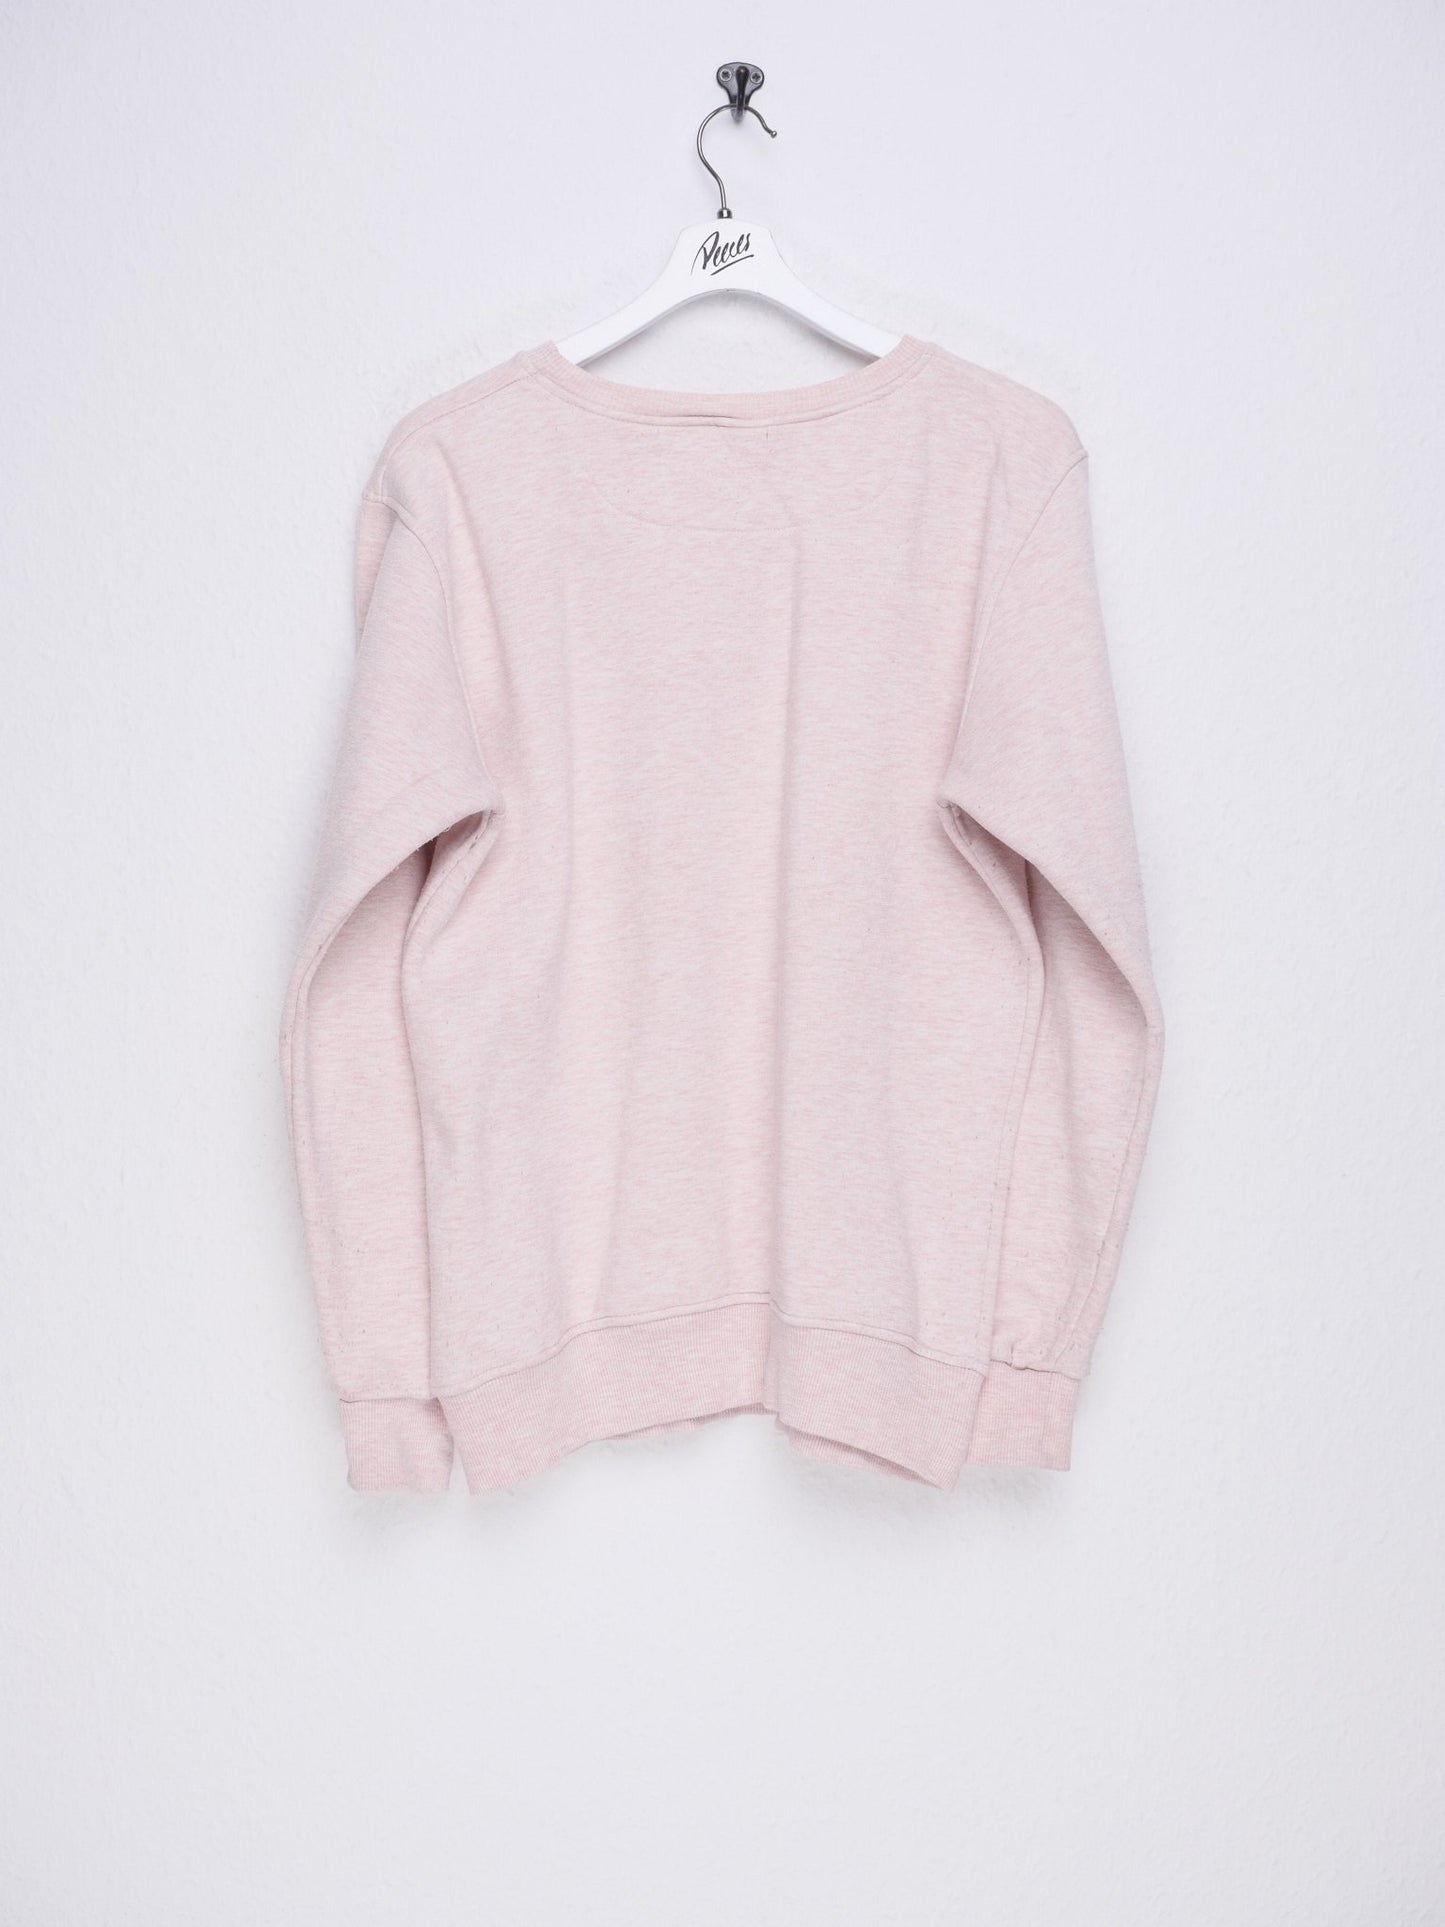 calvin printed big Logo basic pink Sweater - Peeces